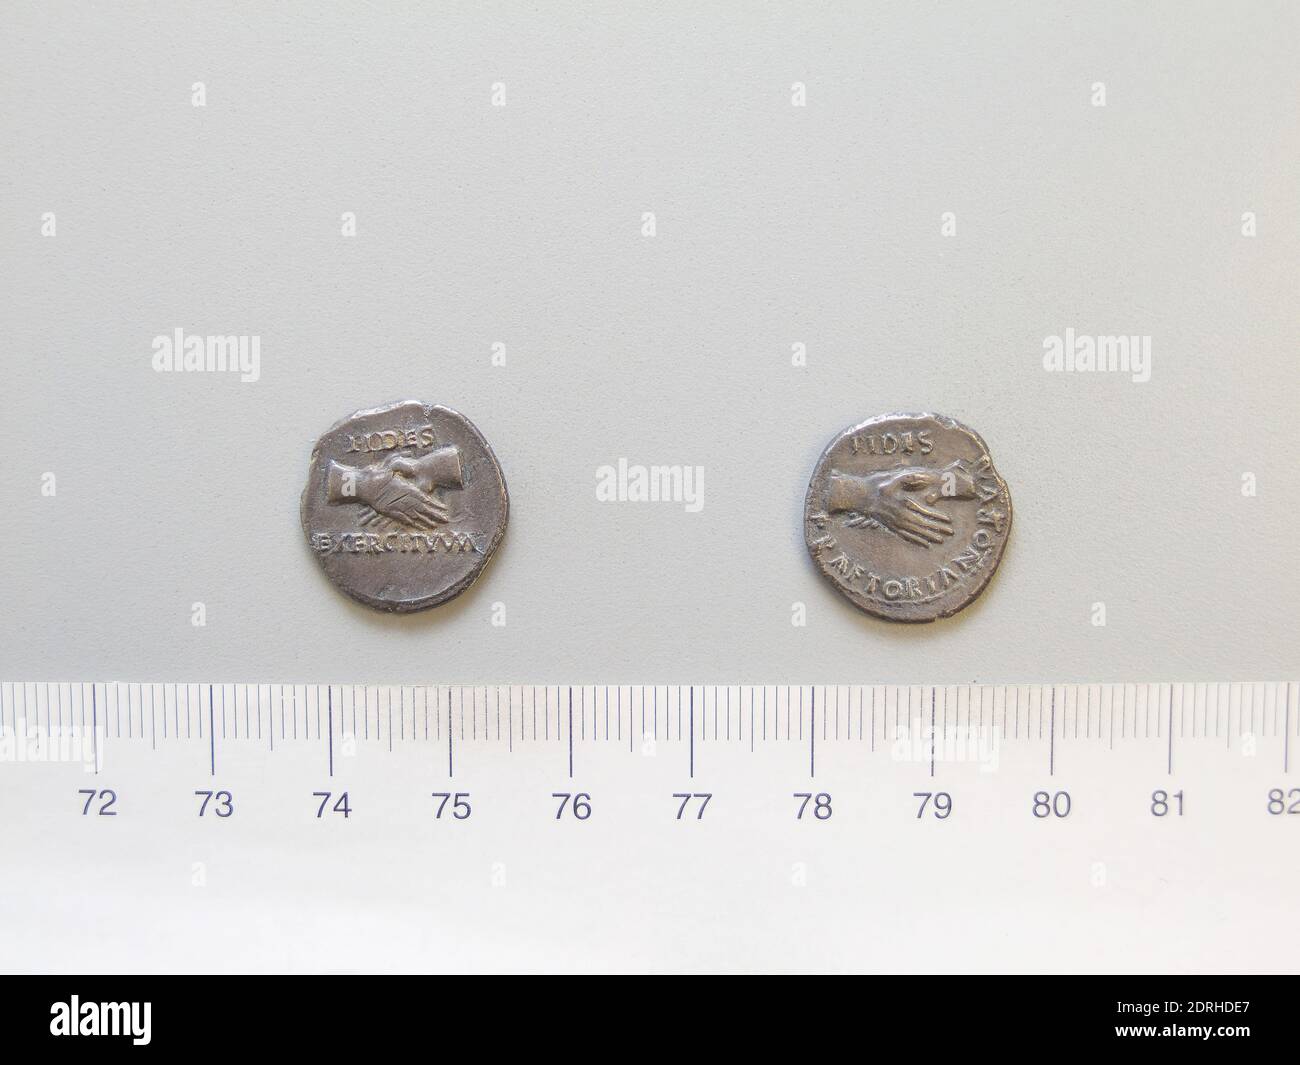 Denarius from Unknown, 68, Silver, 3.3 g, 17.5 mm, 12:00, Made in Roman Empire, Roman, 1st century A.D., Numismatics Stock Photo